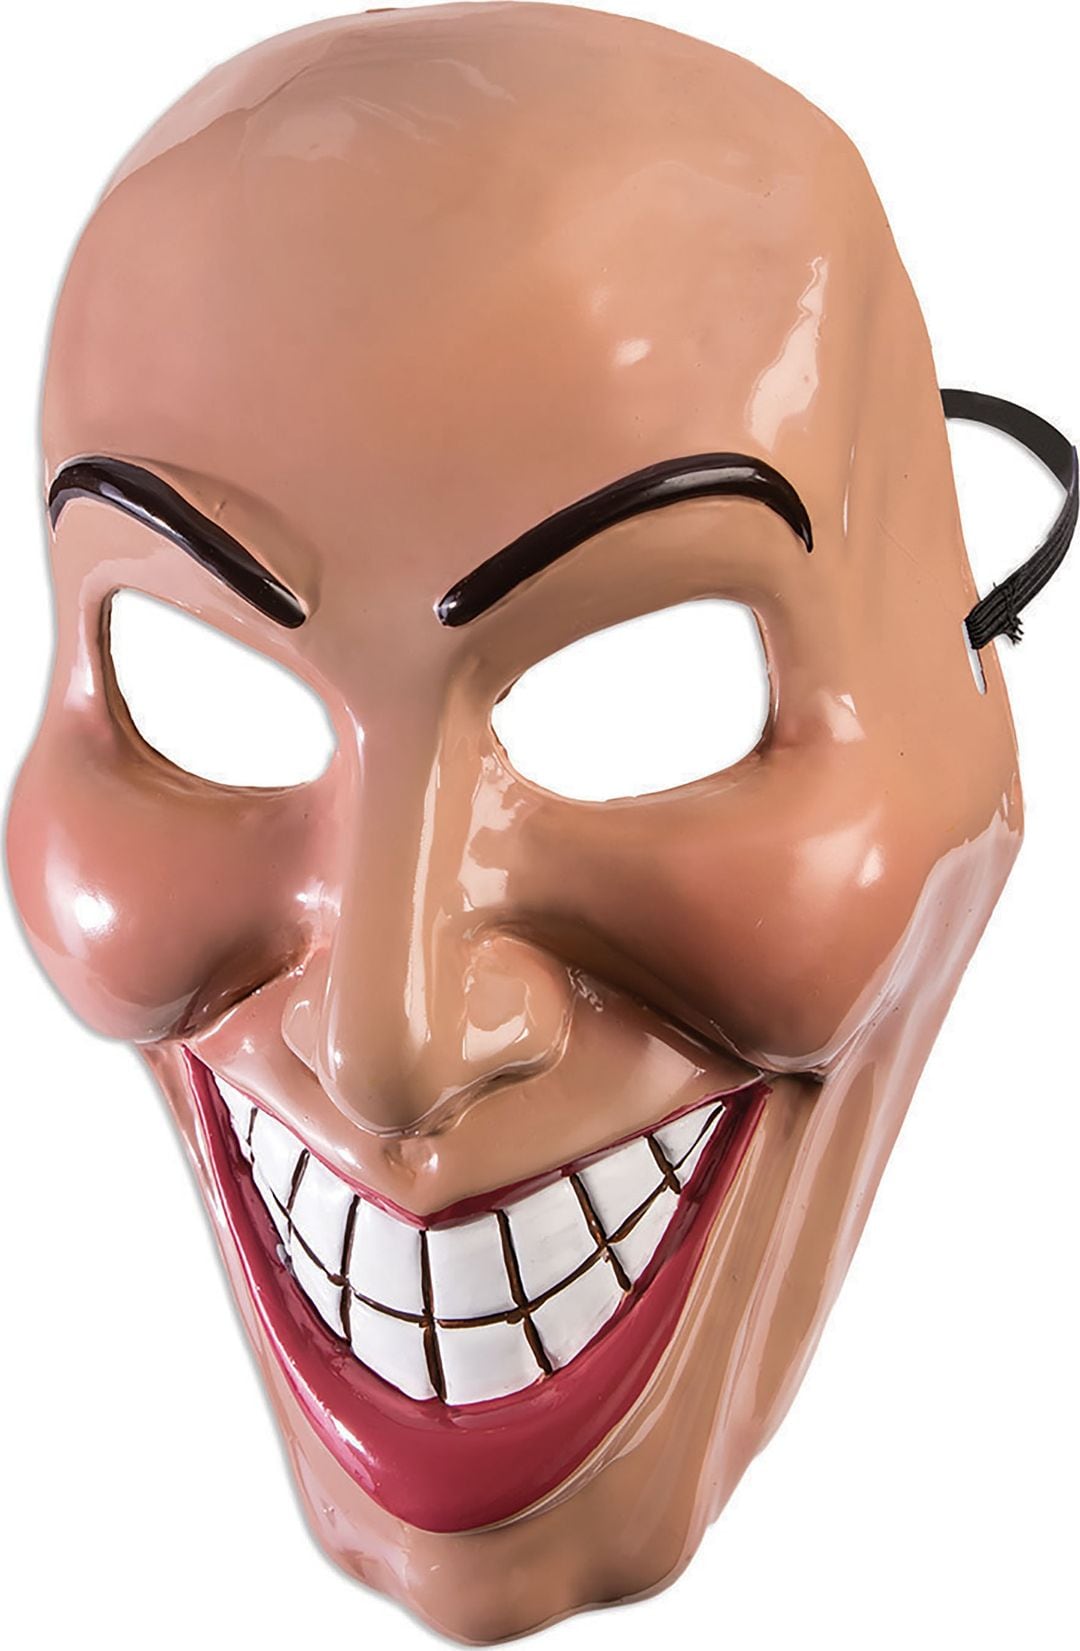 Kwade lachende vrouw masker